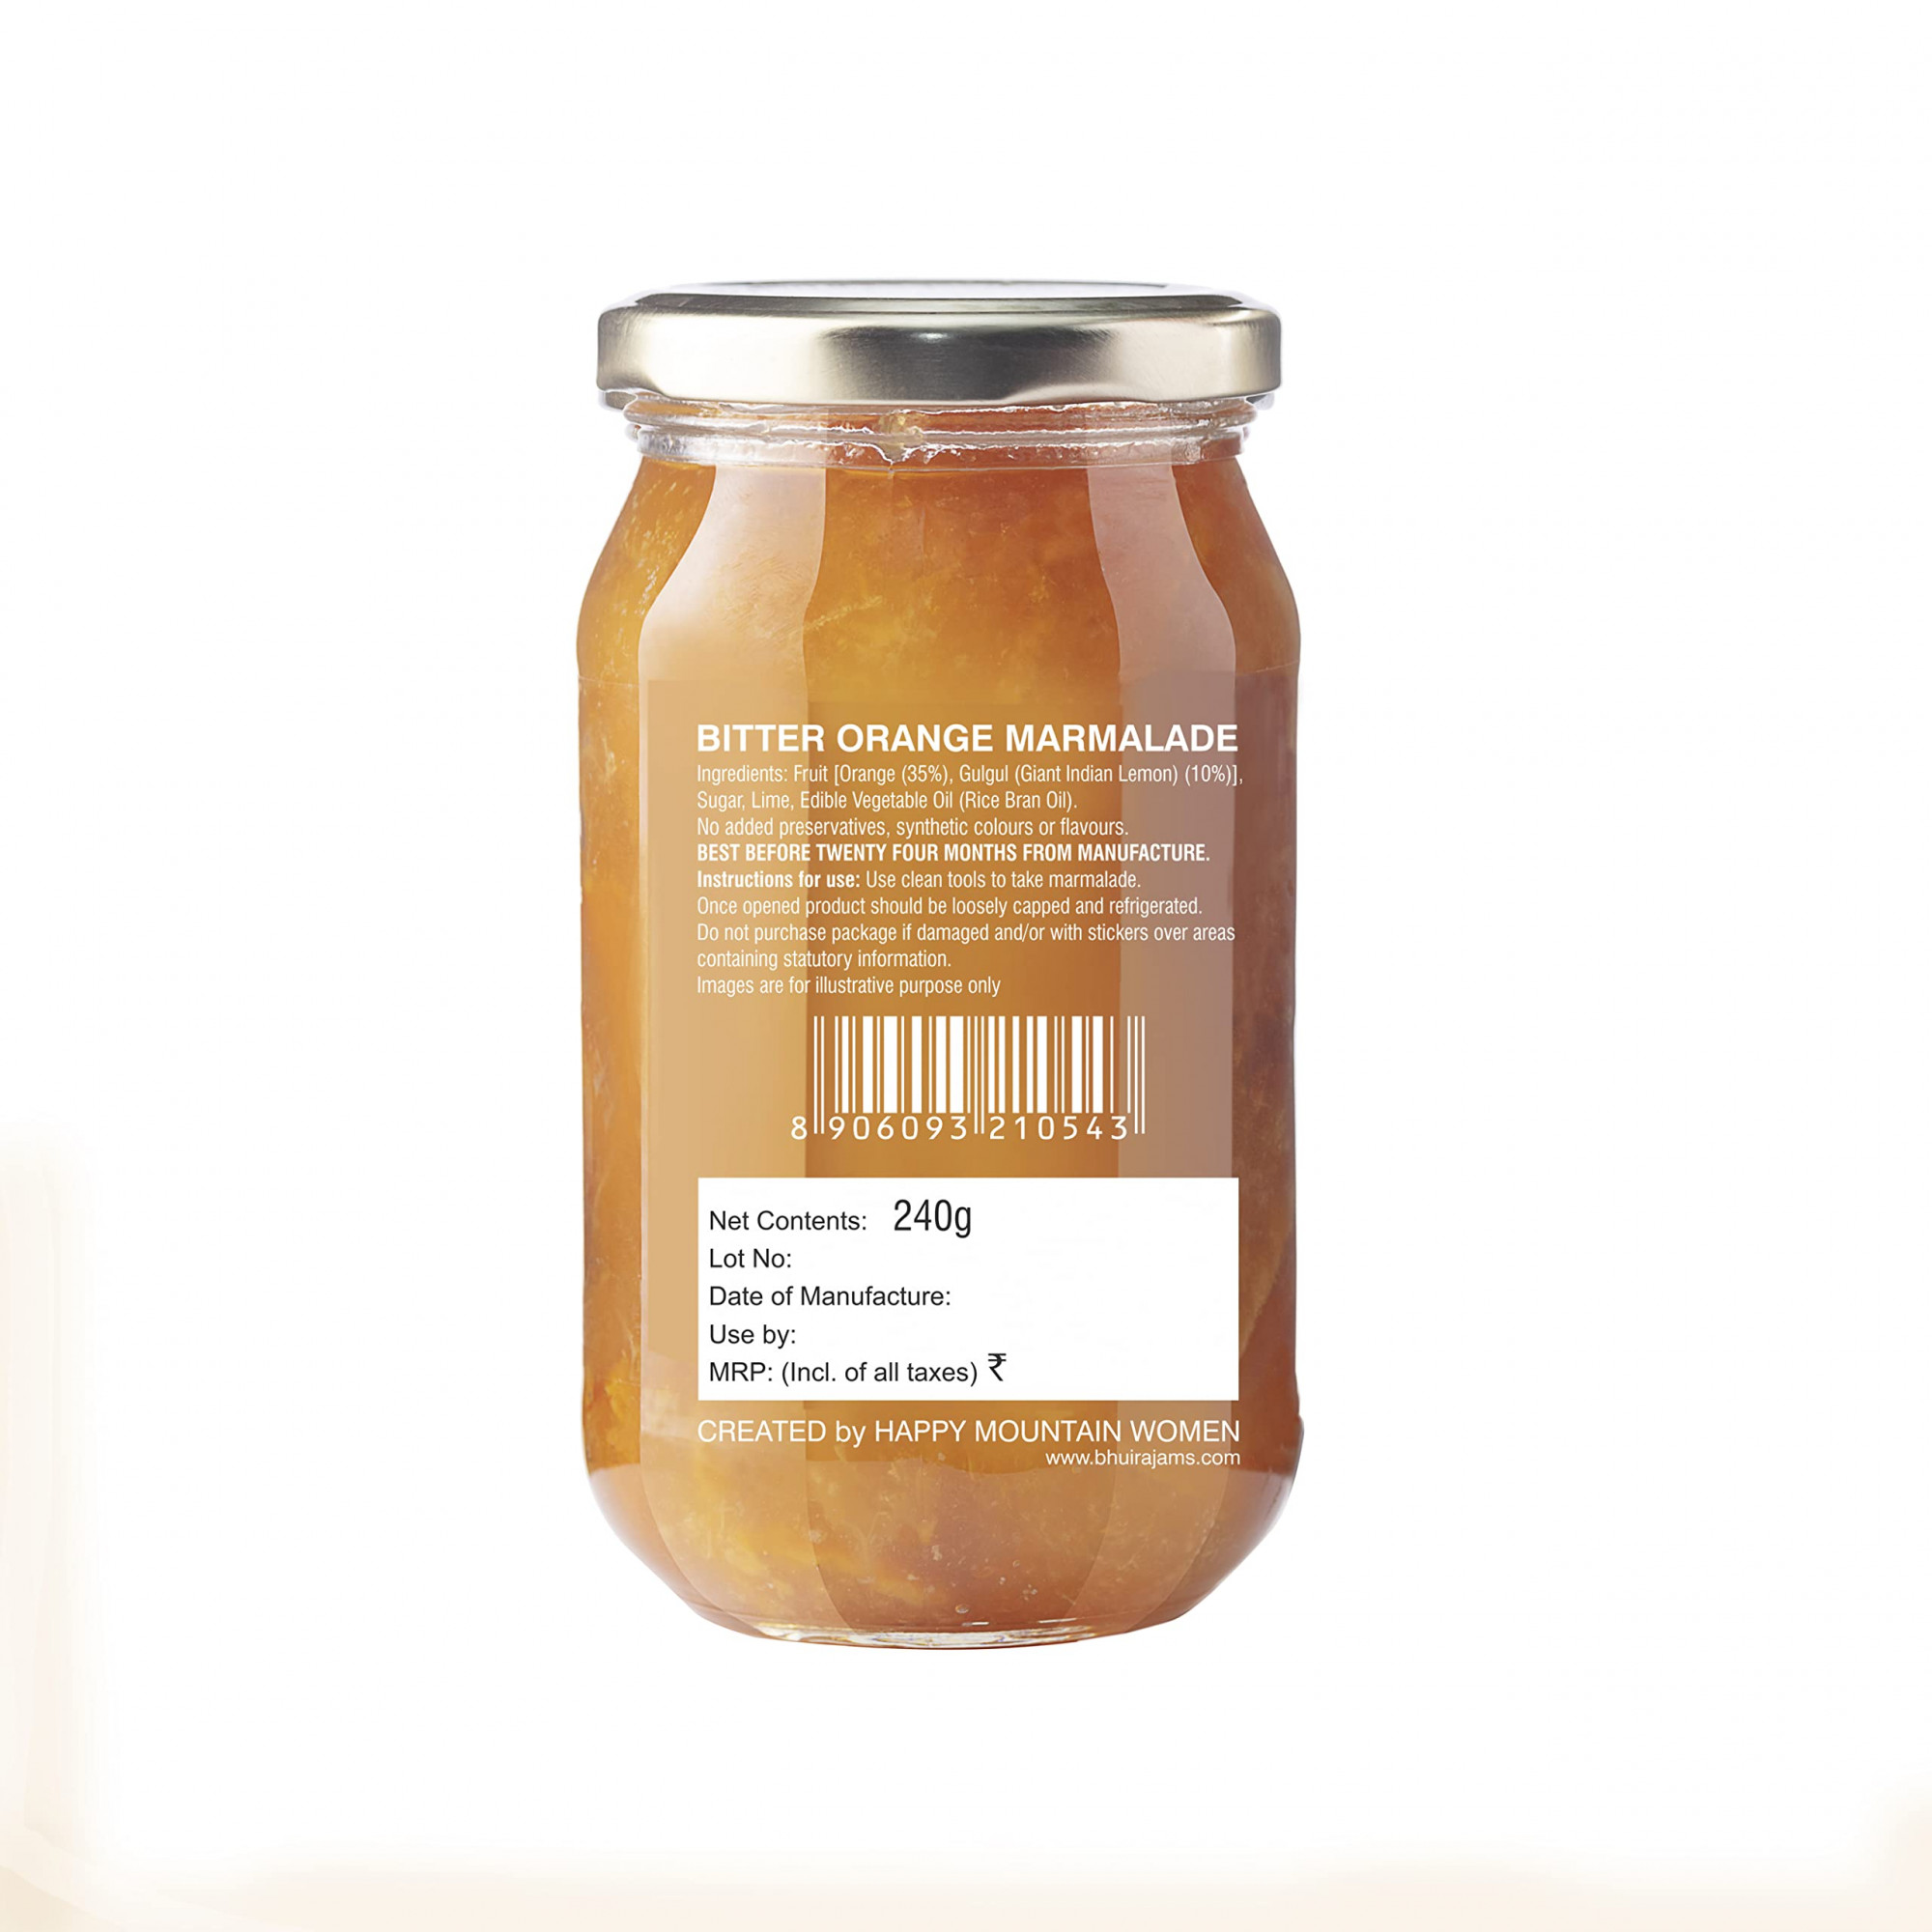 Bhuira|All Natural Jam Bitter Orange Marmalade|No Added preservatives|No Artifical Color Added|240 g|Pack of 1